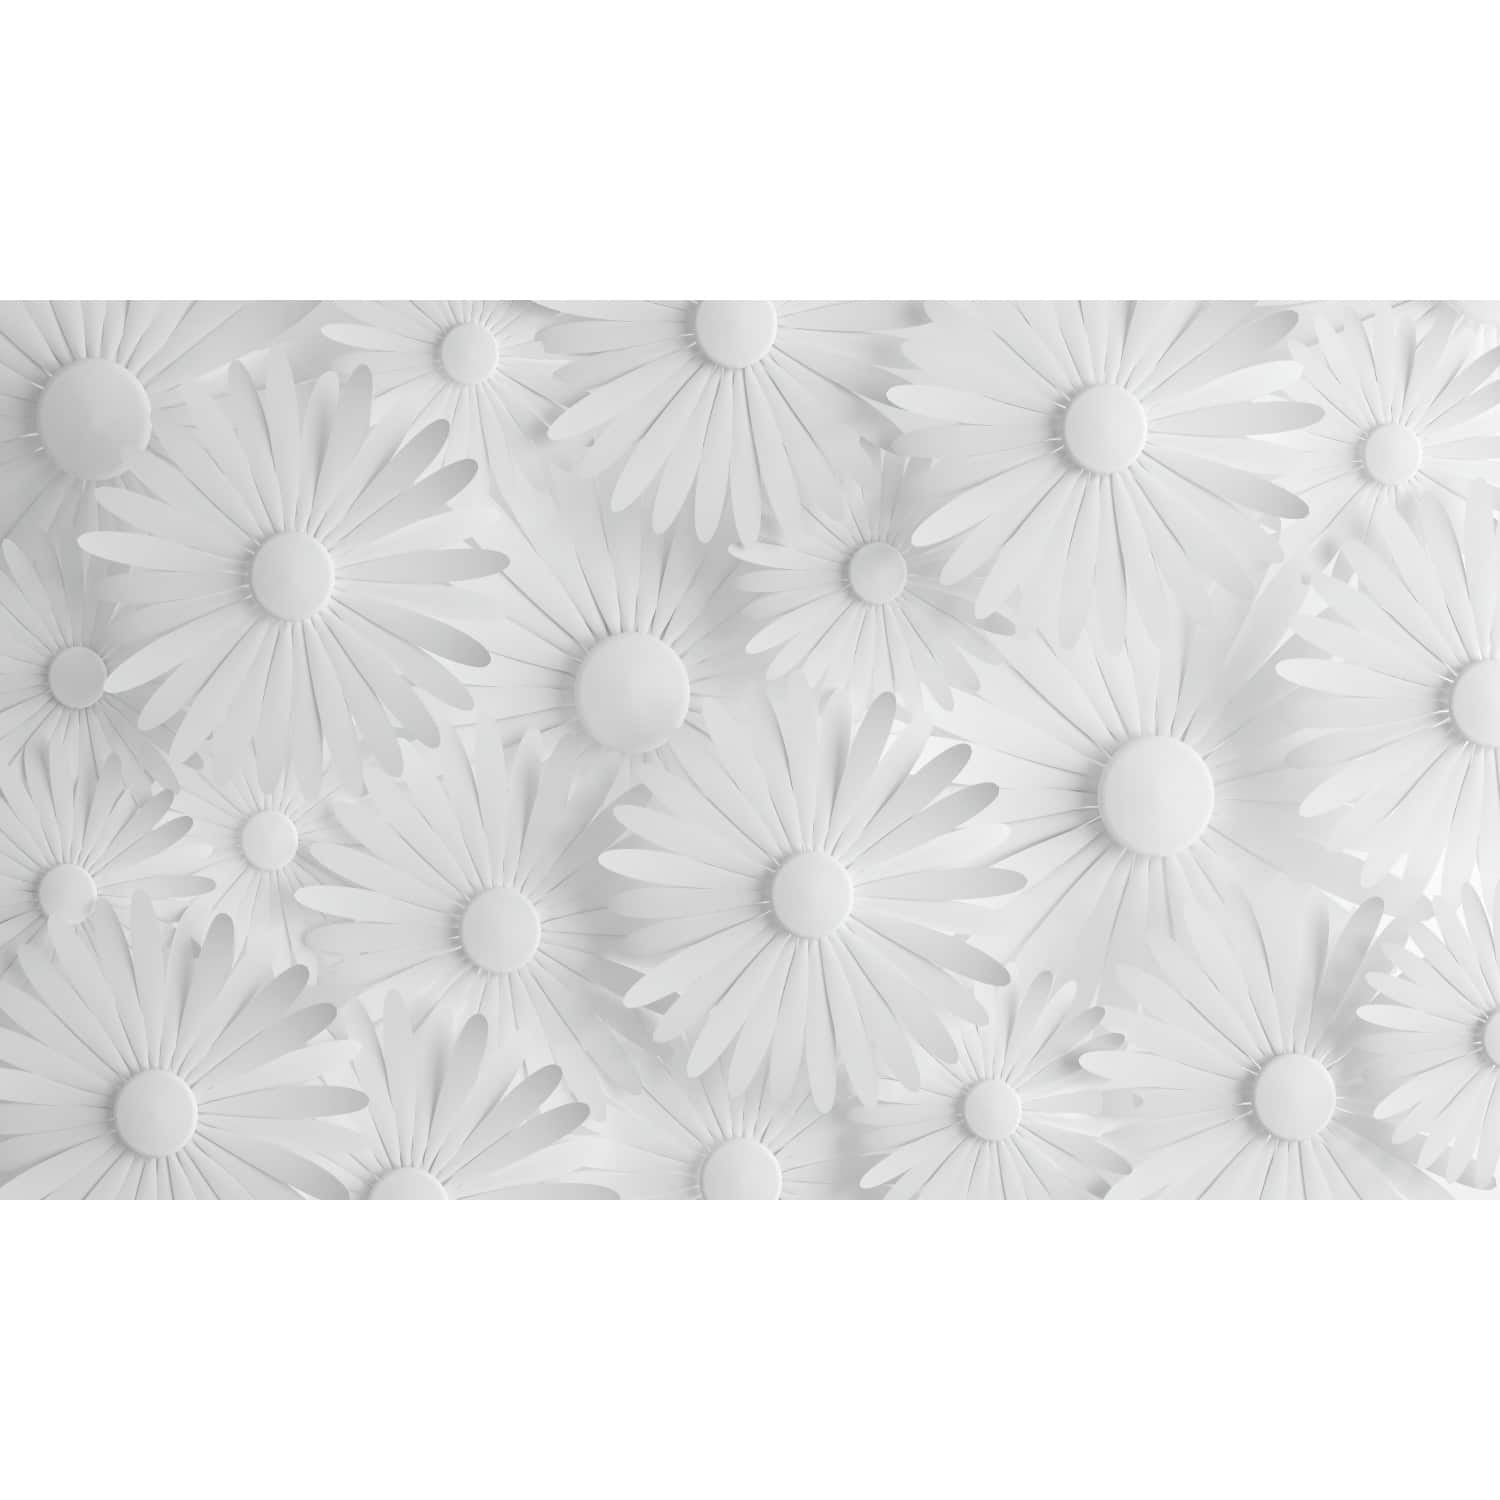 Mr Kate RMK12326M Modern Daisy Peel and Stick Wallpaper Mural White Grey   Amazoncom